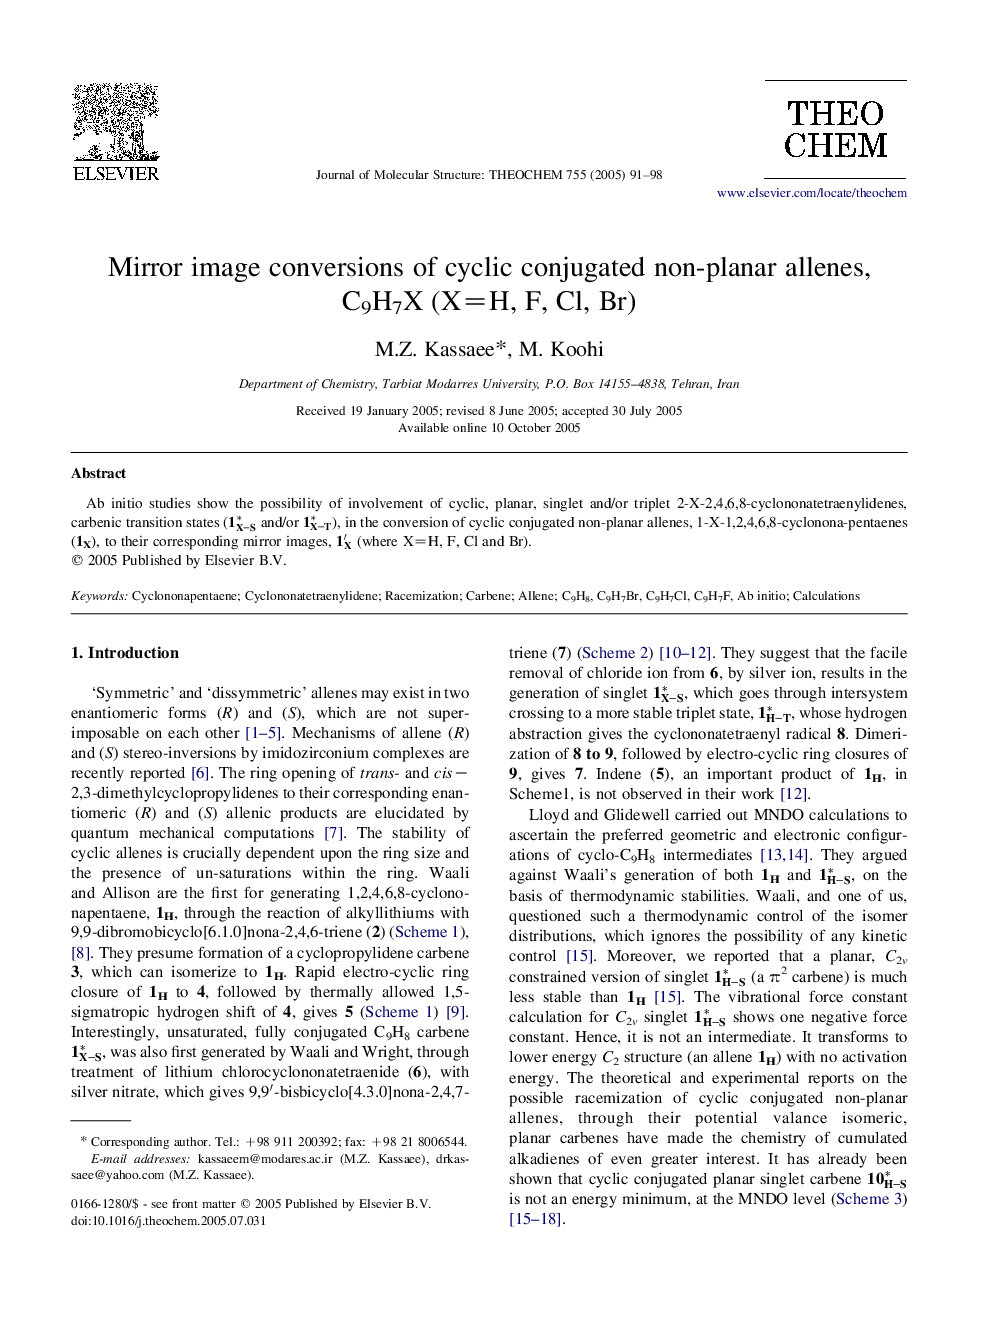 Mirror image conversions of cyclic conjugated non-planar allenes, C9H7X (X=H, F, Cl, Br)